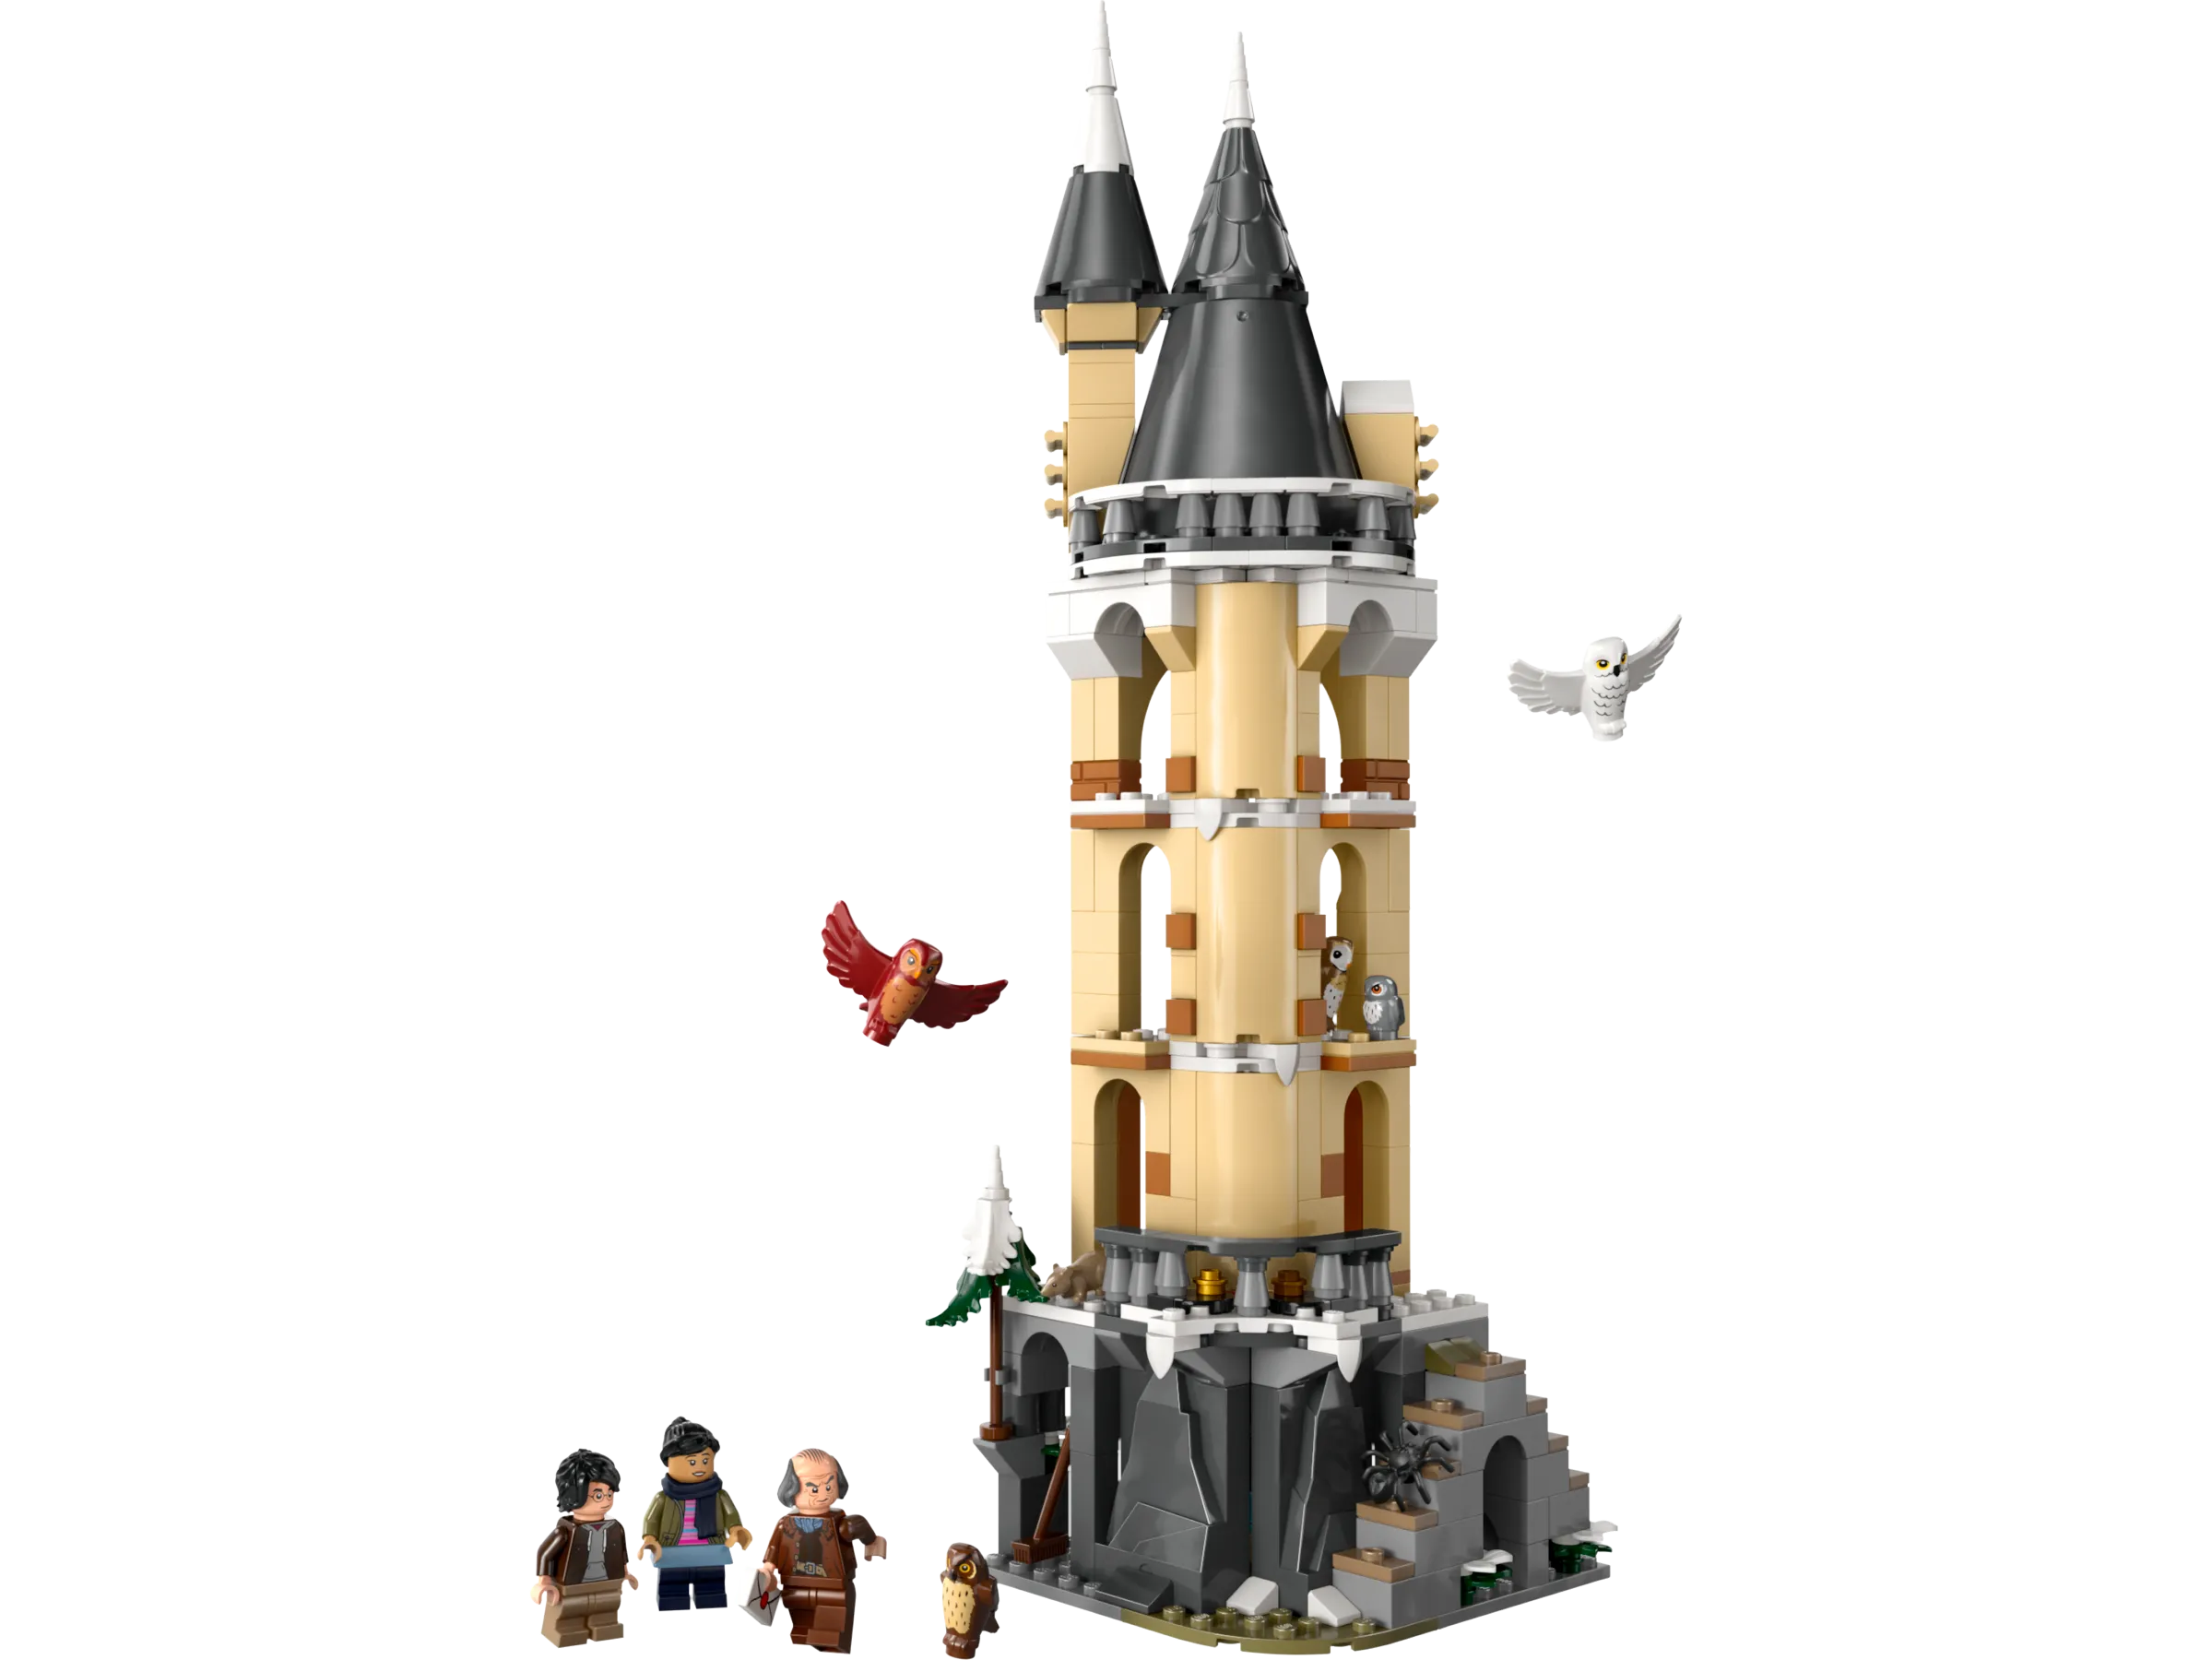 Lego Harry Potter Hogwarts Castle Set